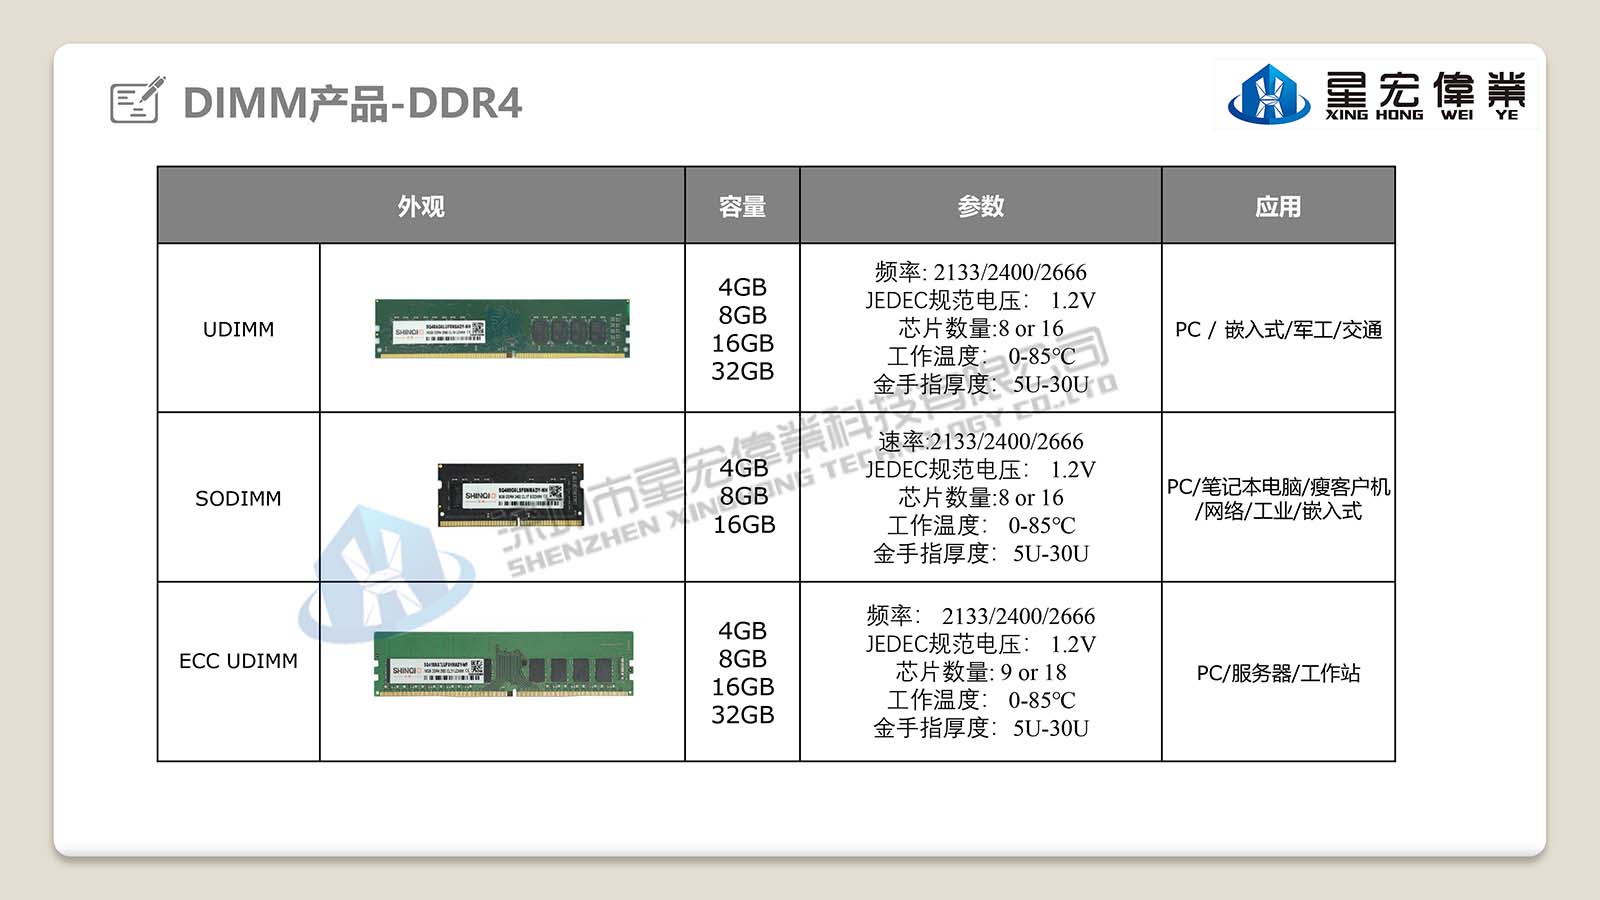 【星宏伟业】ECC SODIMM-SHINQIO 笔记本/嵌入式内存 DDR3 2G 4G 8G